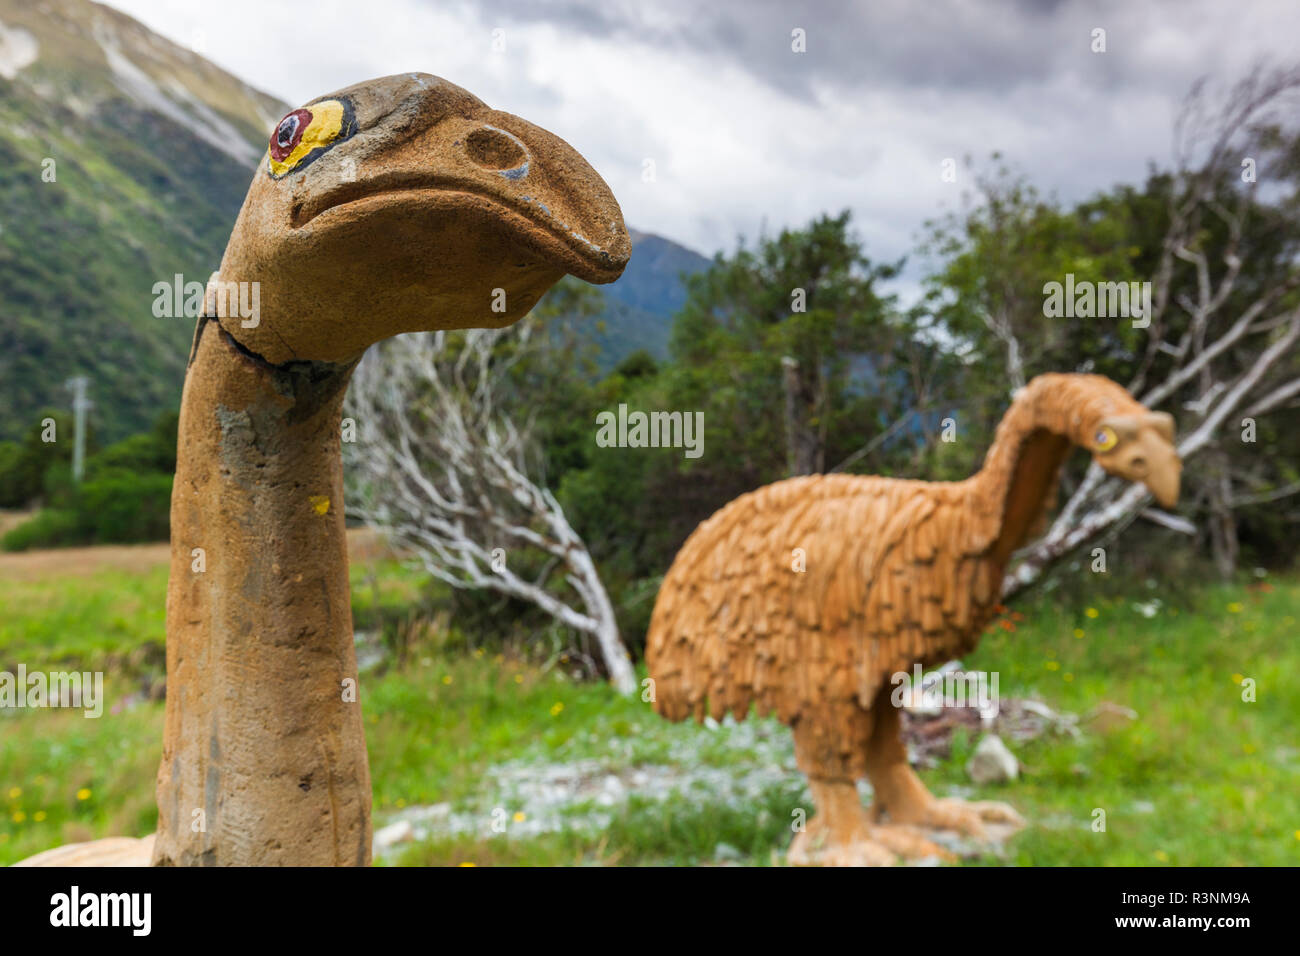 New Zealand South Island West Coast Otira Sculptures Of The Big Moa Extinct New Zealand Bird Stock Photo Alamy